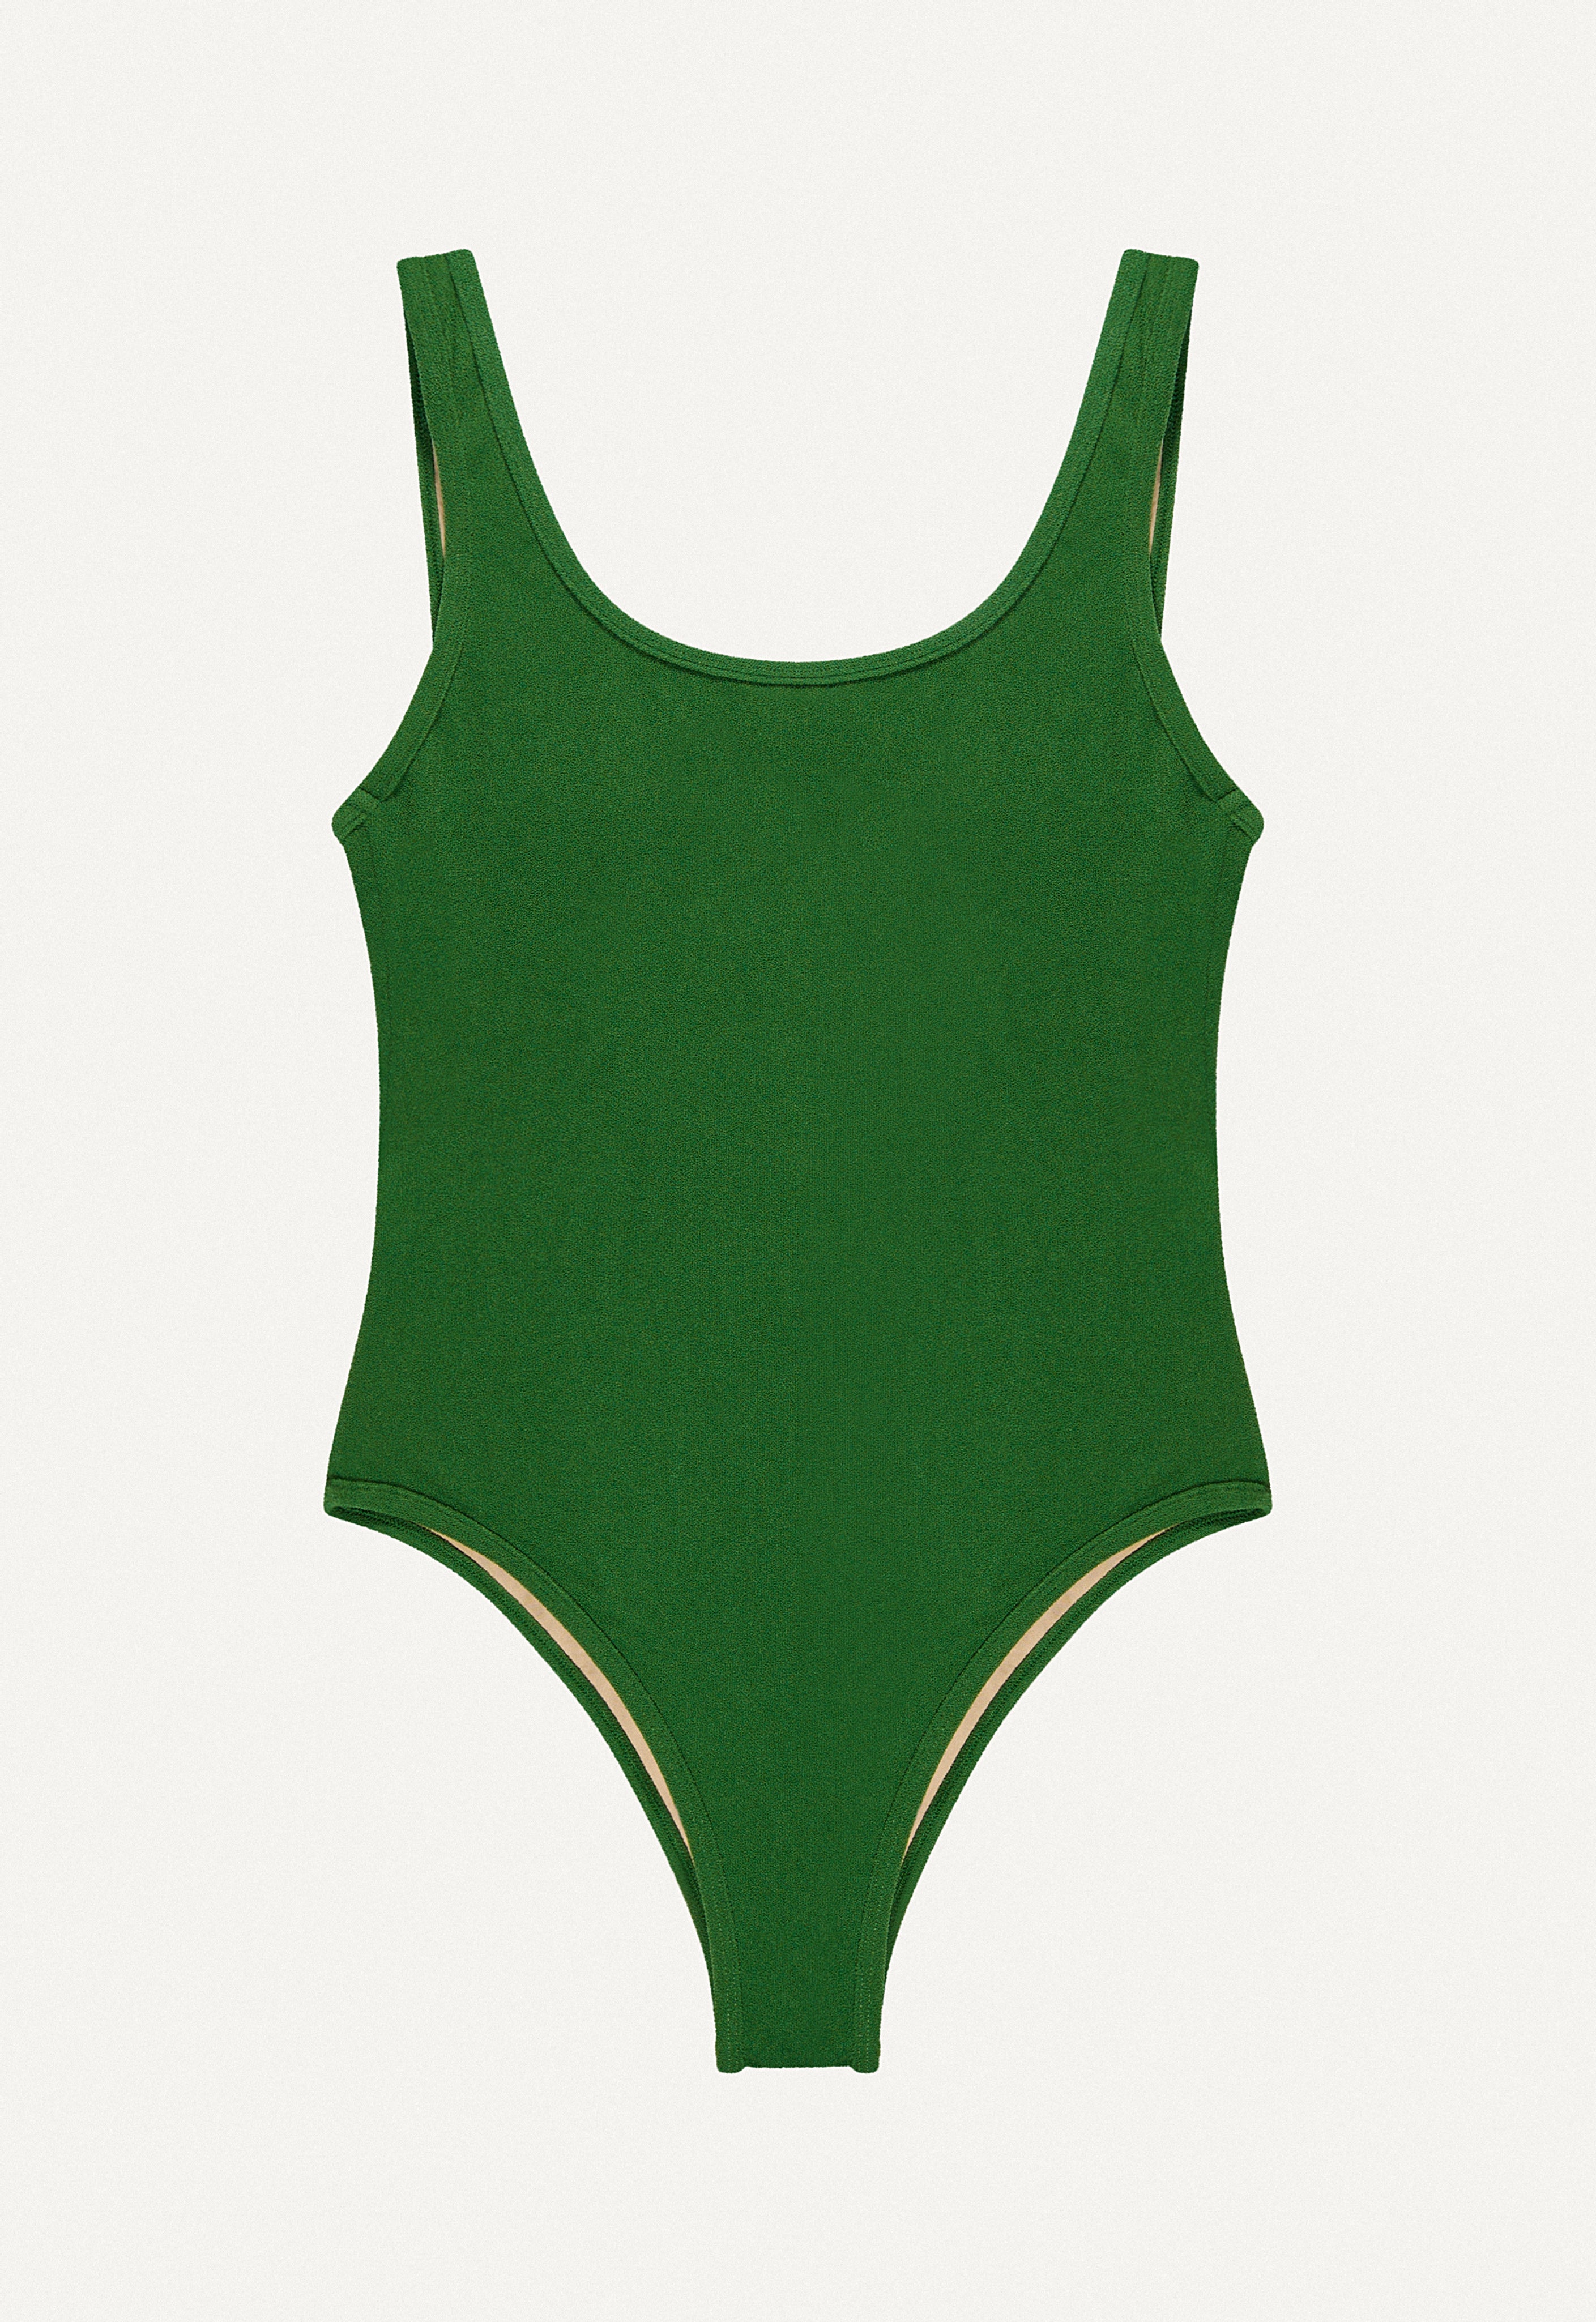 Oy-badeanzug-A23-swimwear-Zephyr-dunkelgruen-frottee-front.jpg